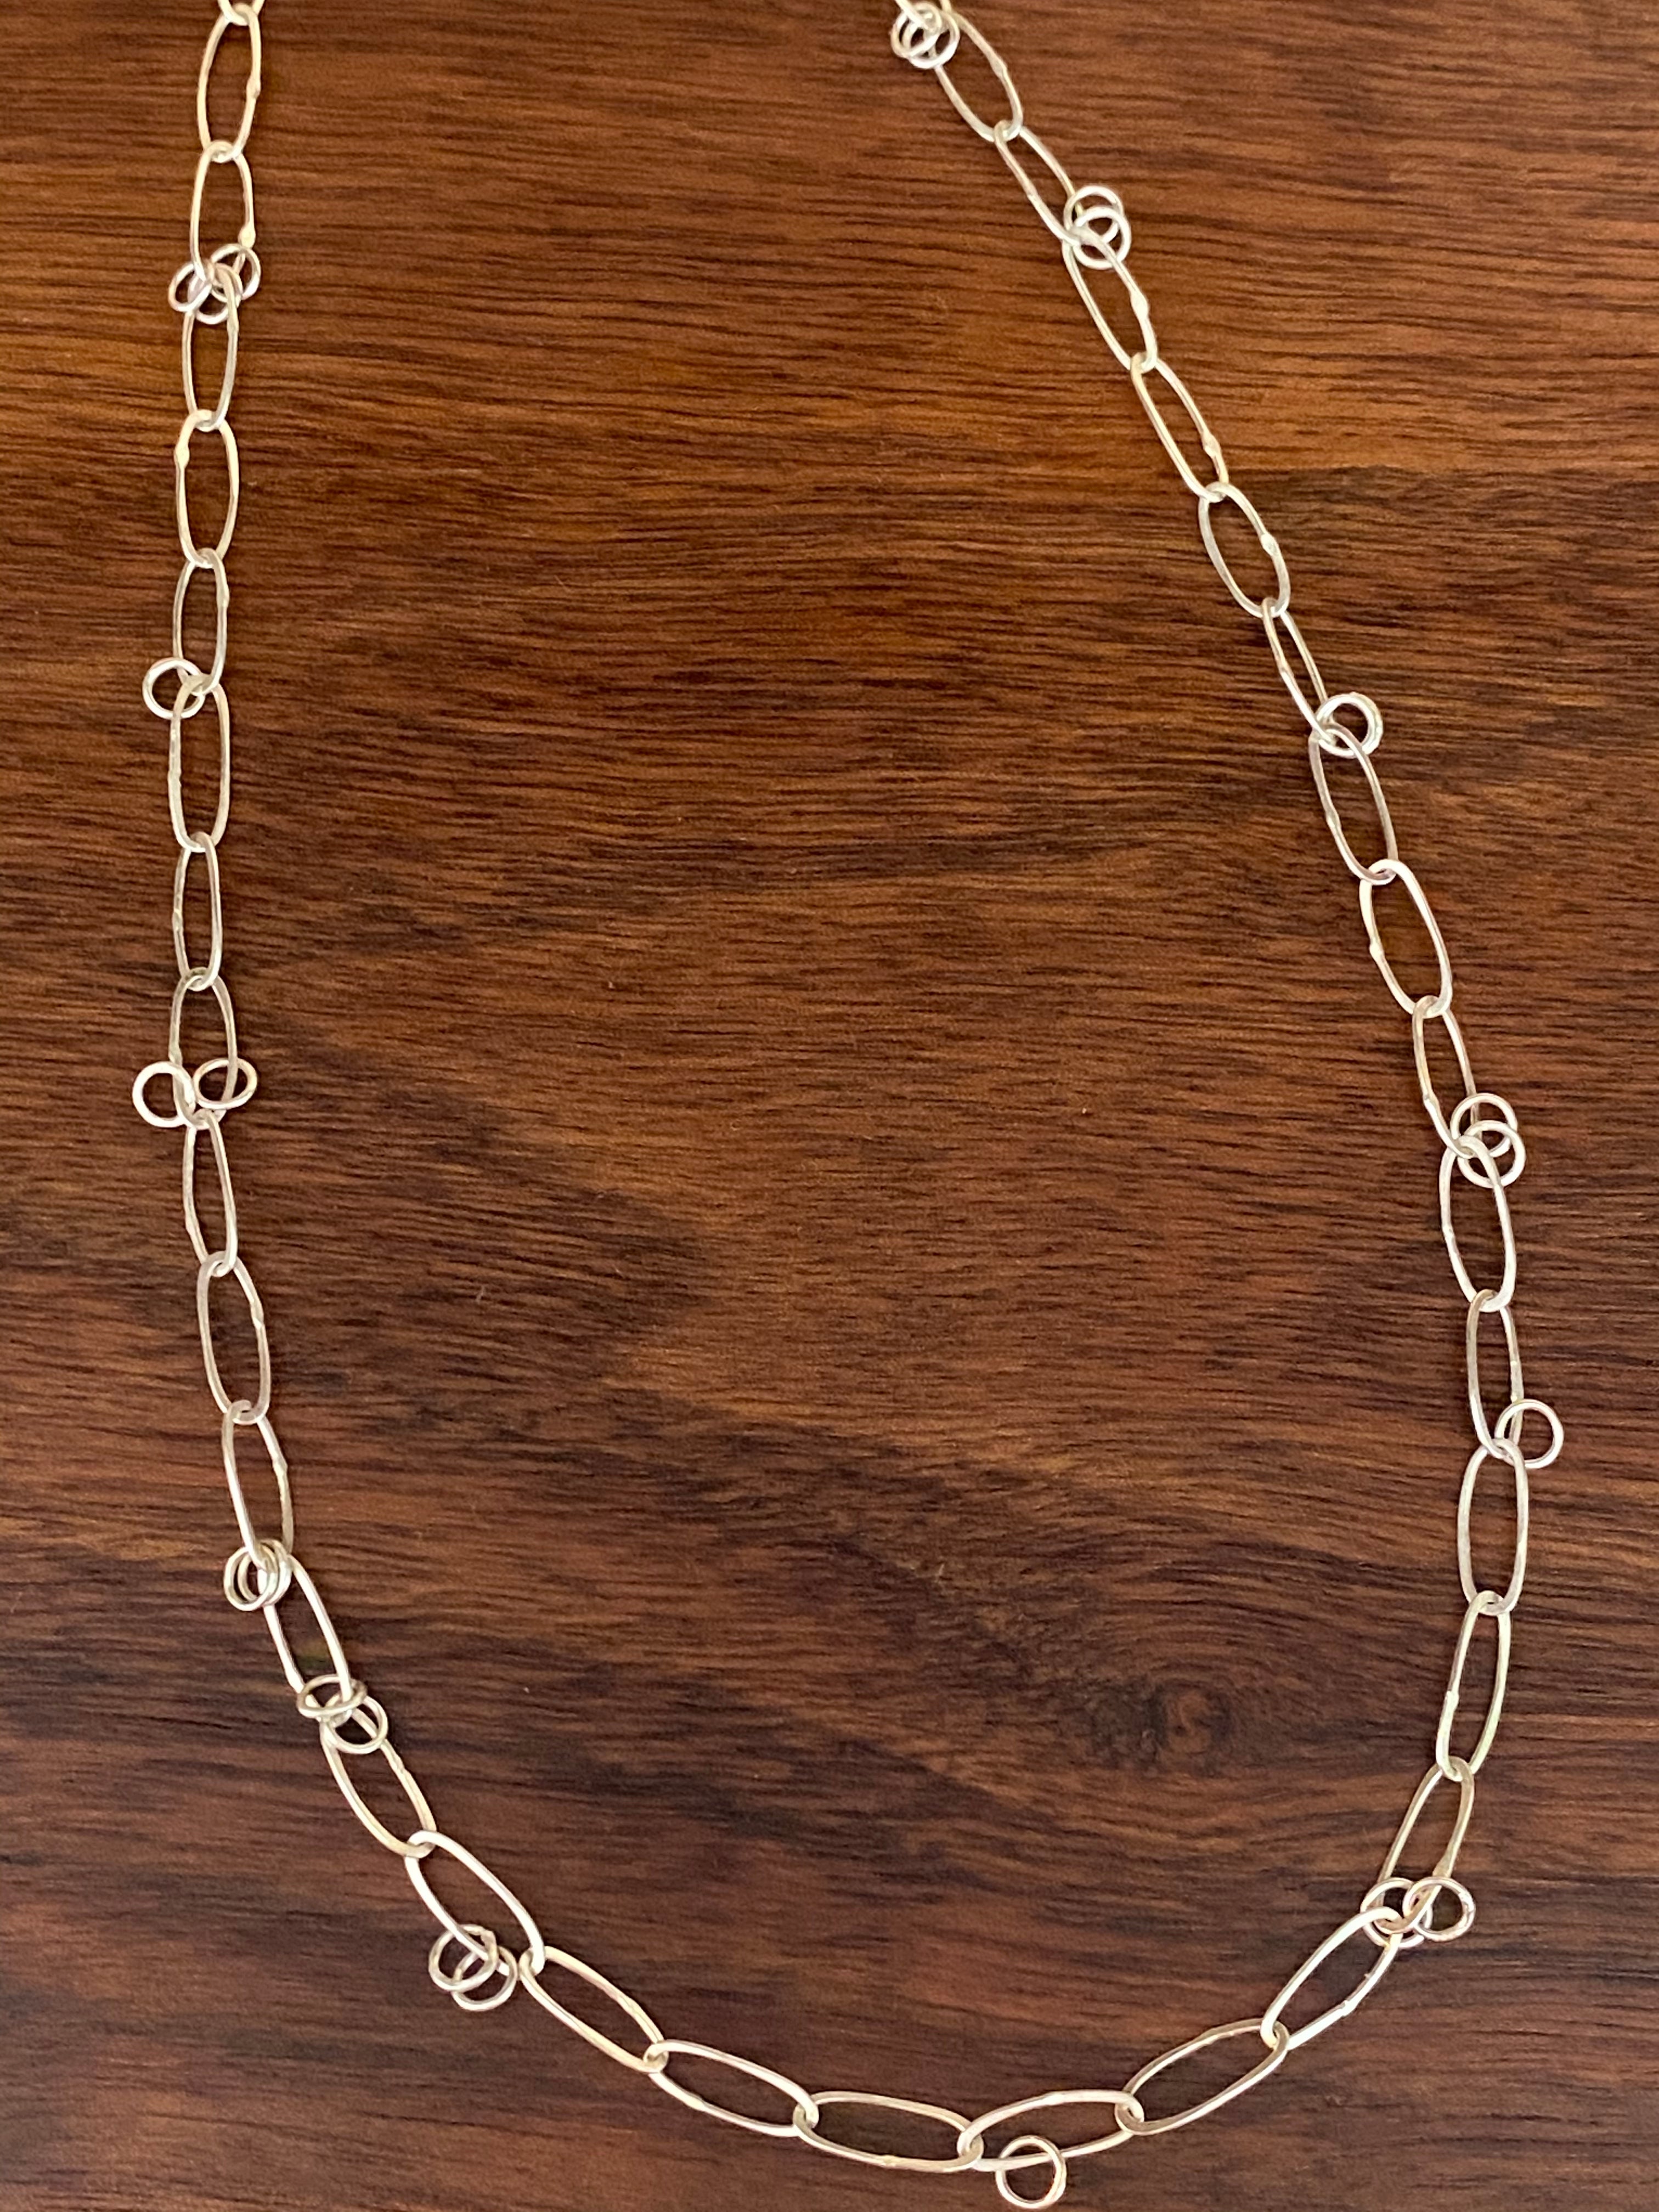 Siedra Loeffler- Oval Links Chain Necklace